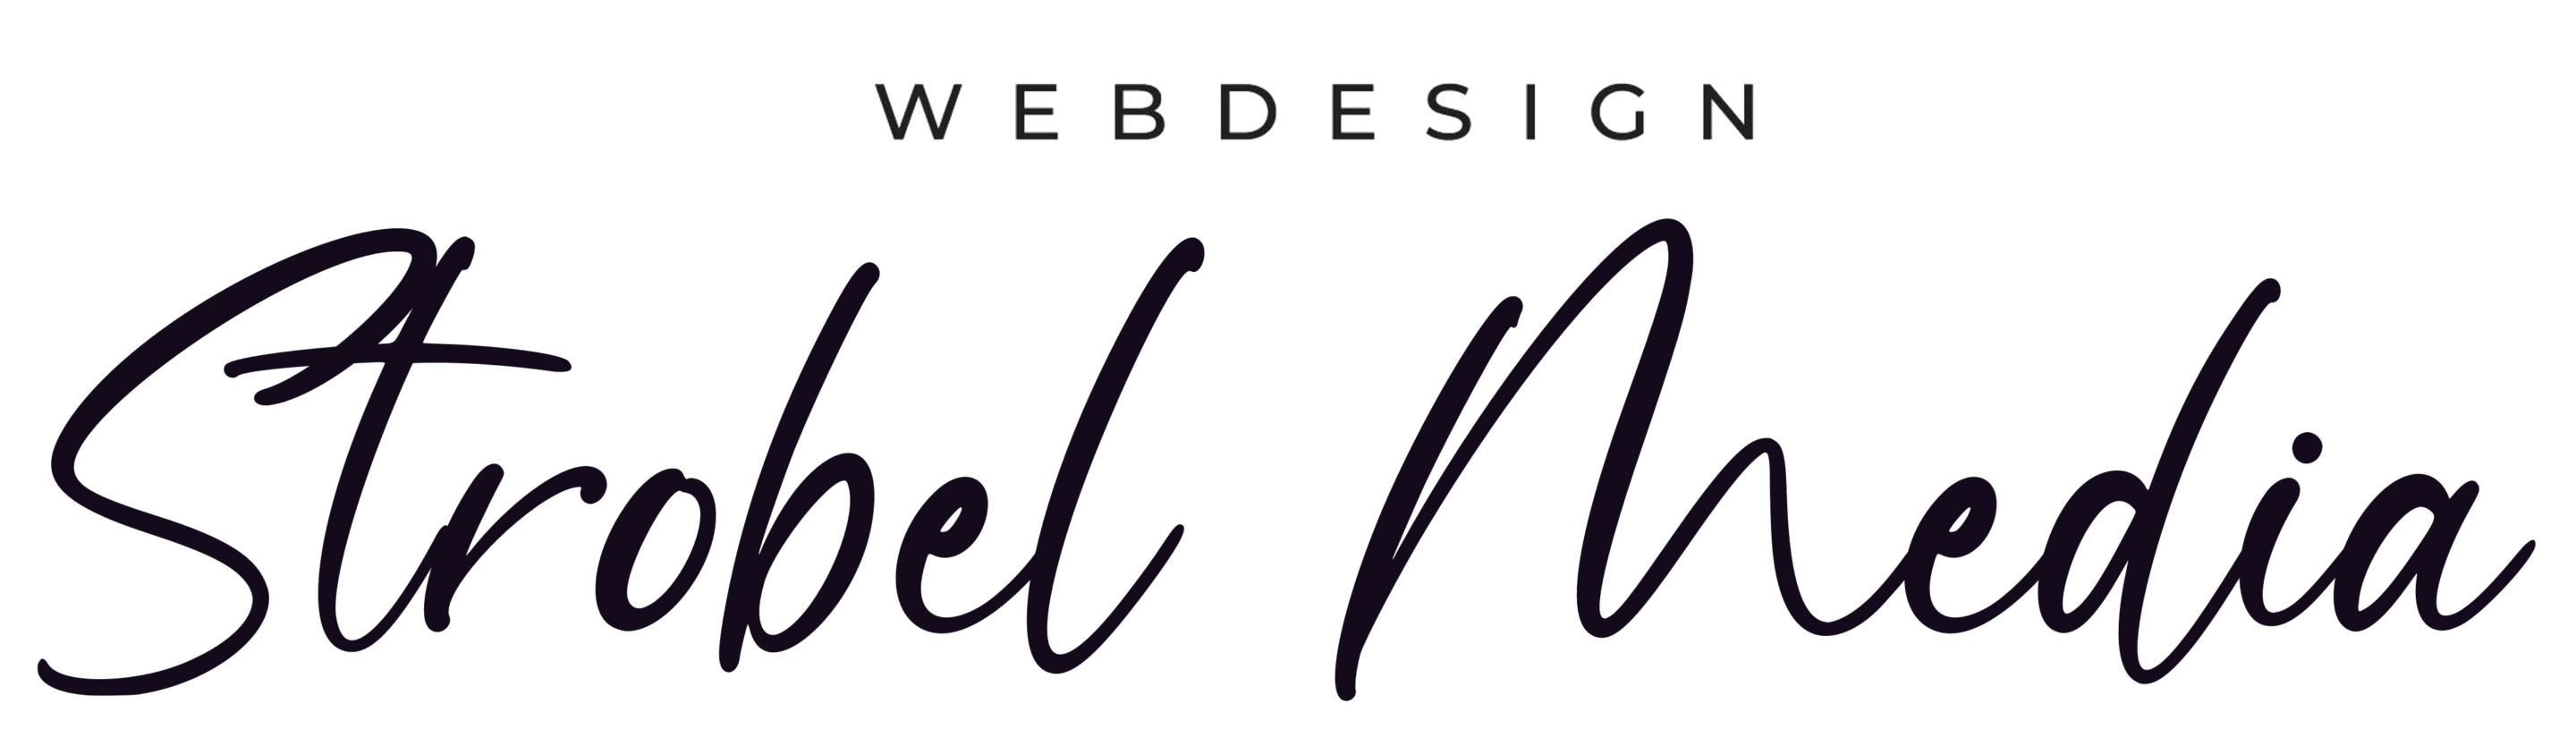 webdesign-strobel-media-logo